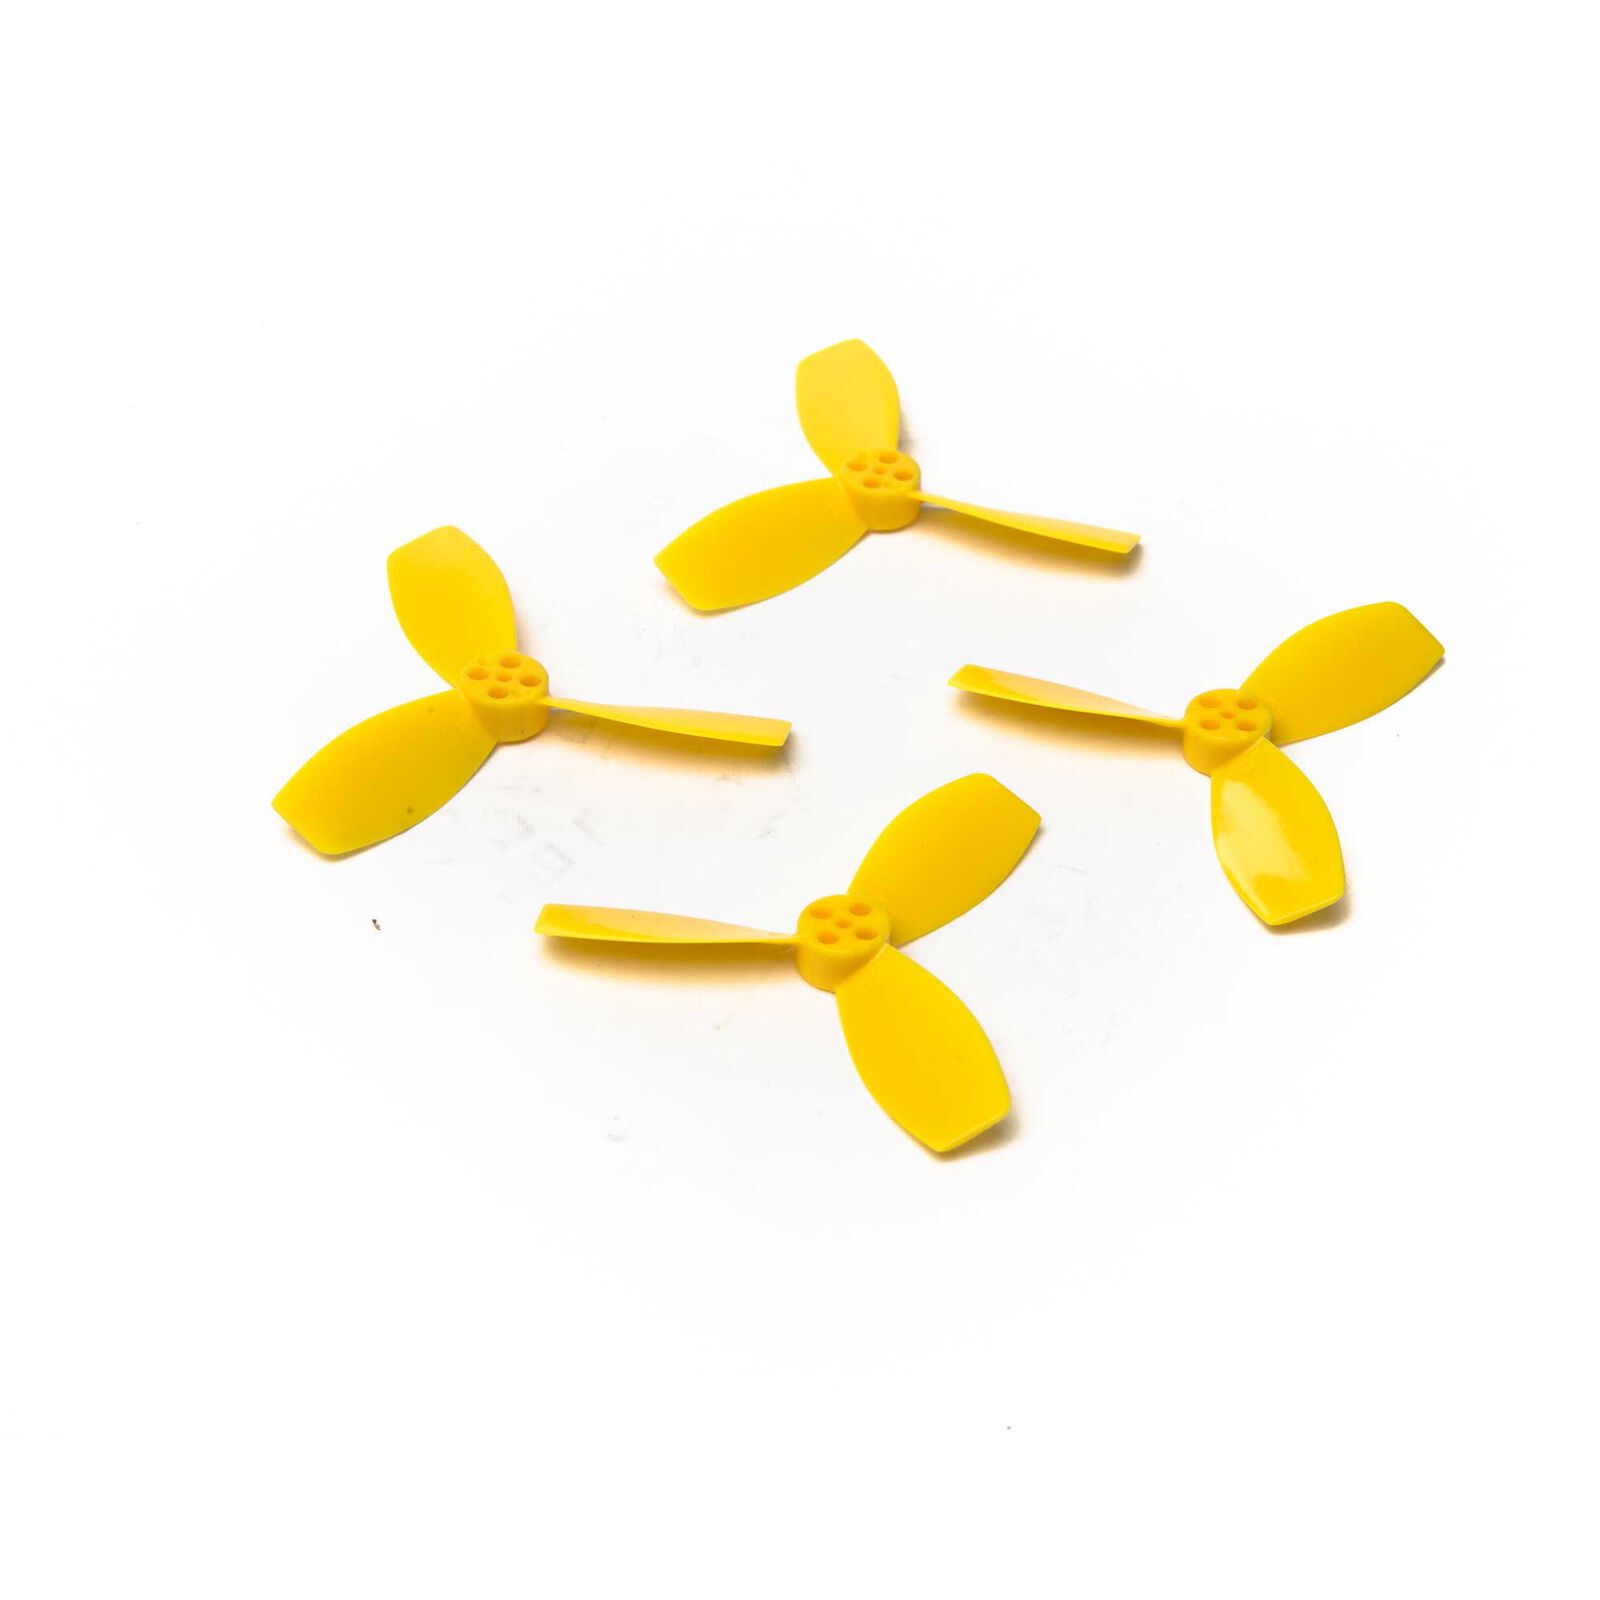 2" FPV Propellers Yellow (4): Torrent 110